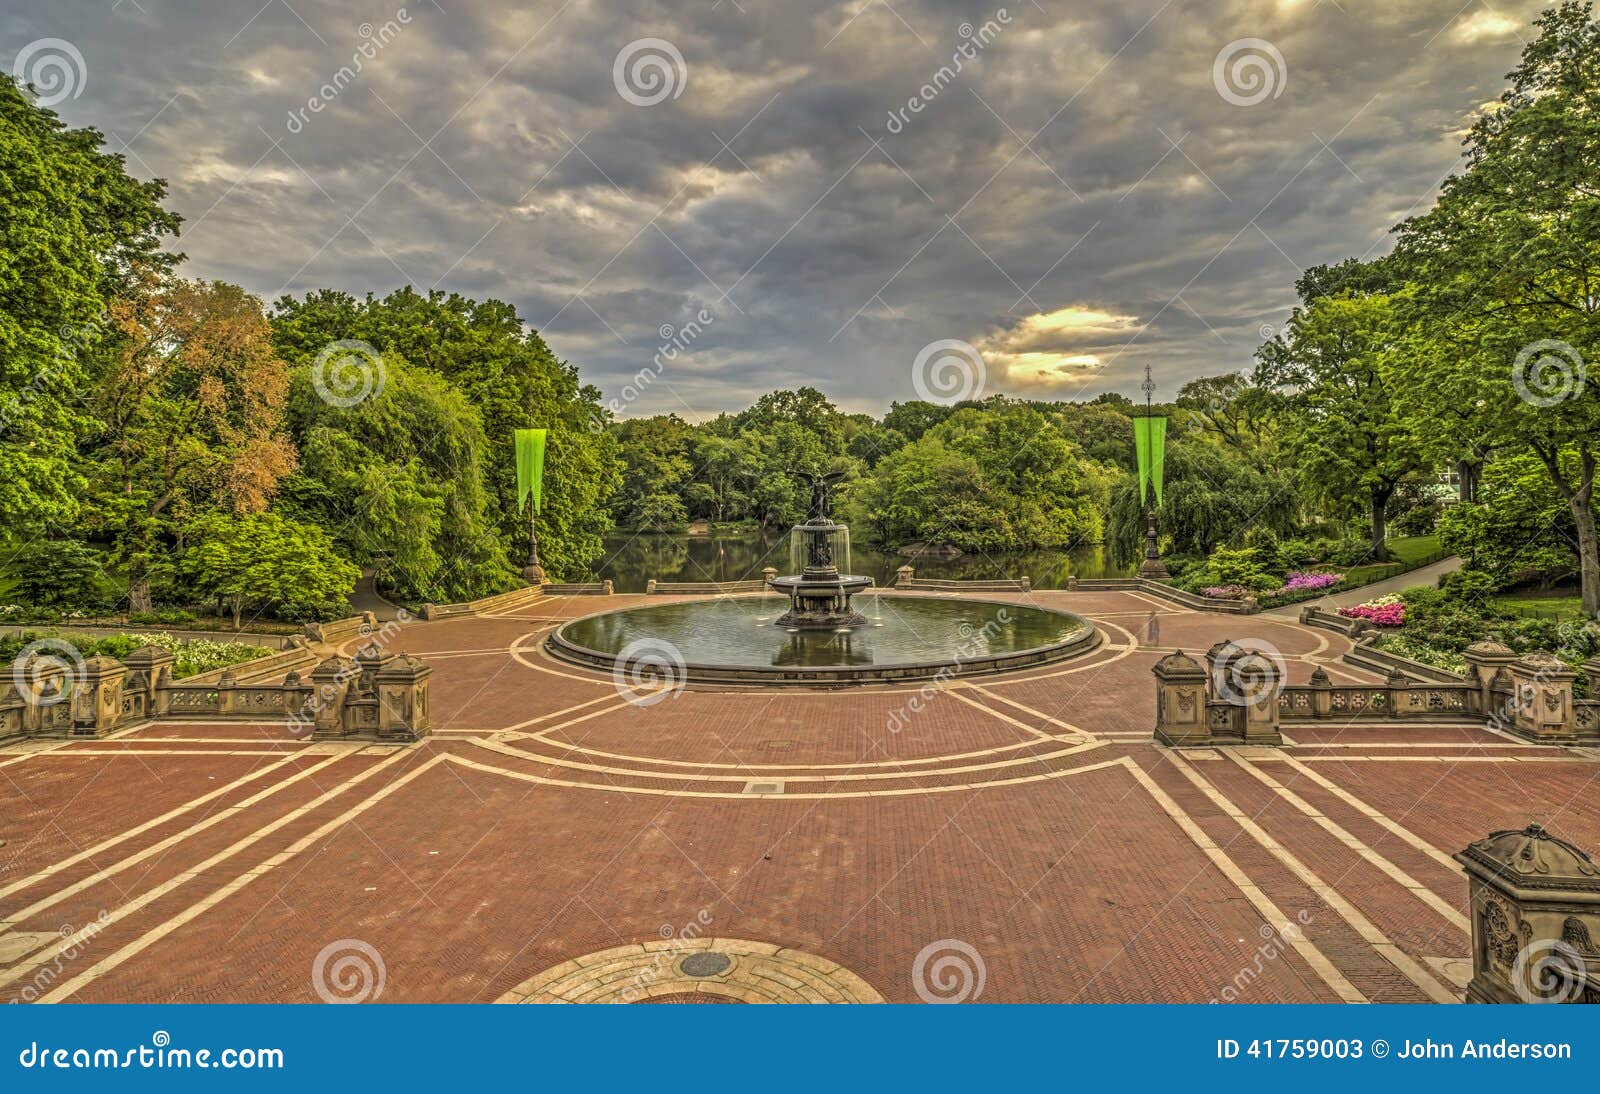 Bethesda Terrace and Fountain, Central Park, New York